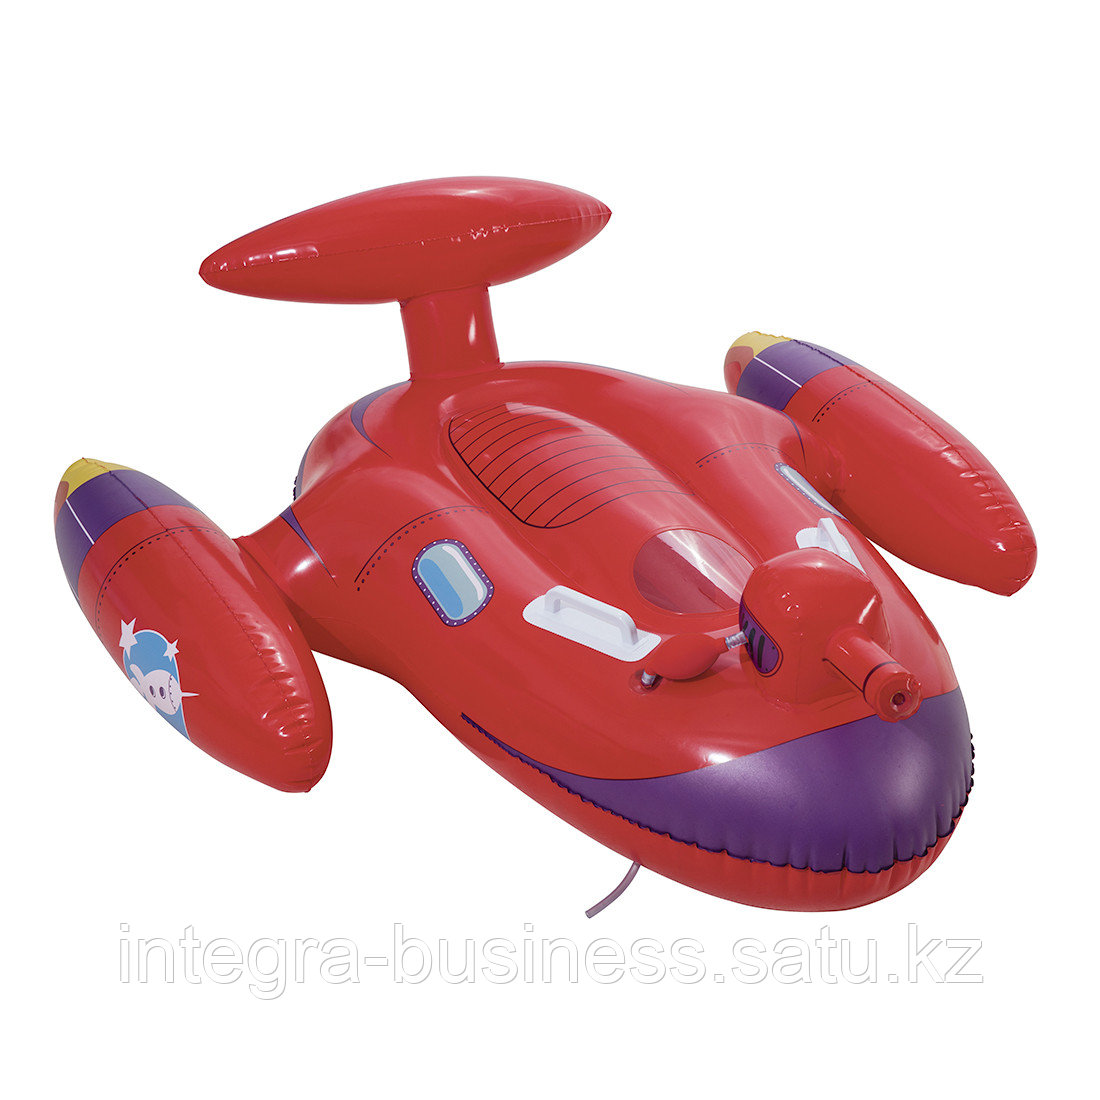 Надувная игрушка Bestway 41100 в форме космолёта для плавания, фото 1